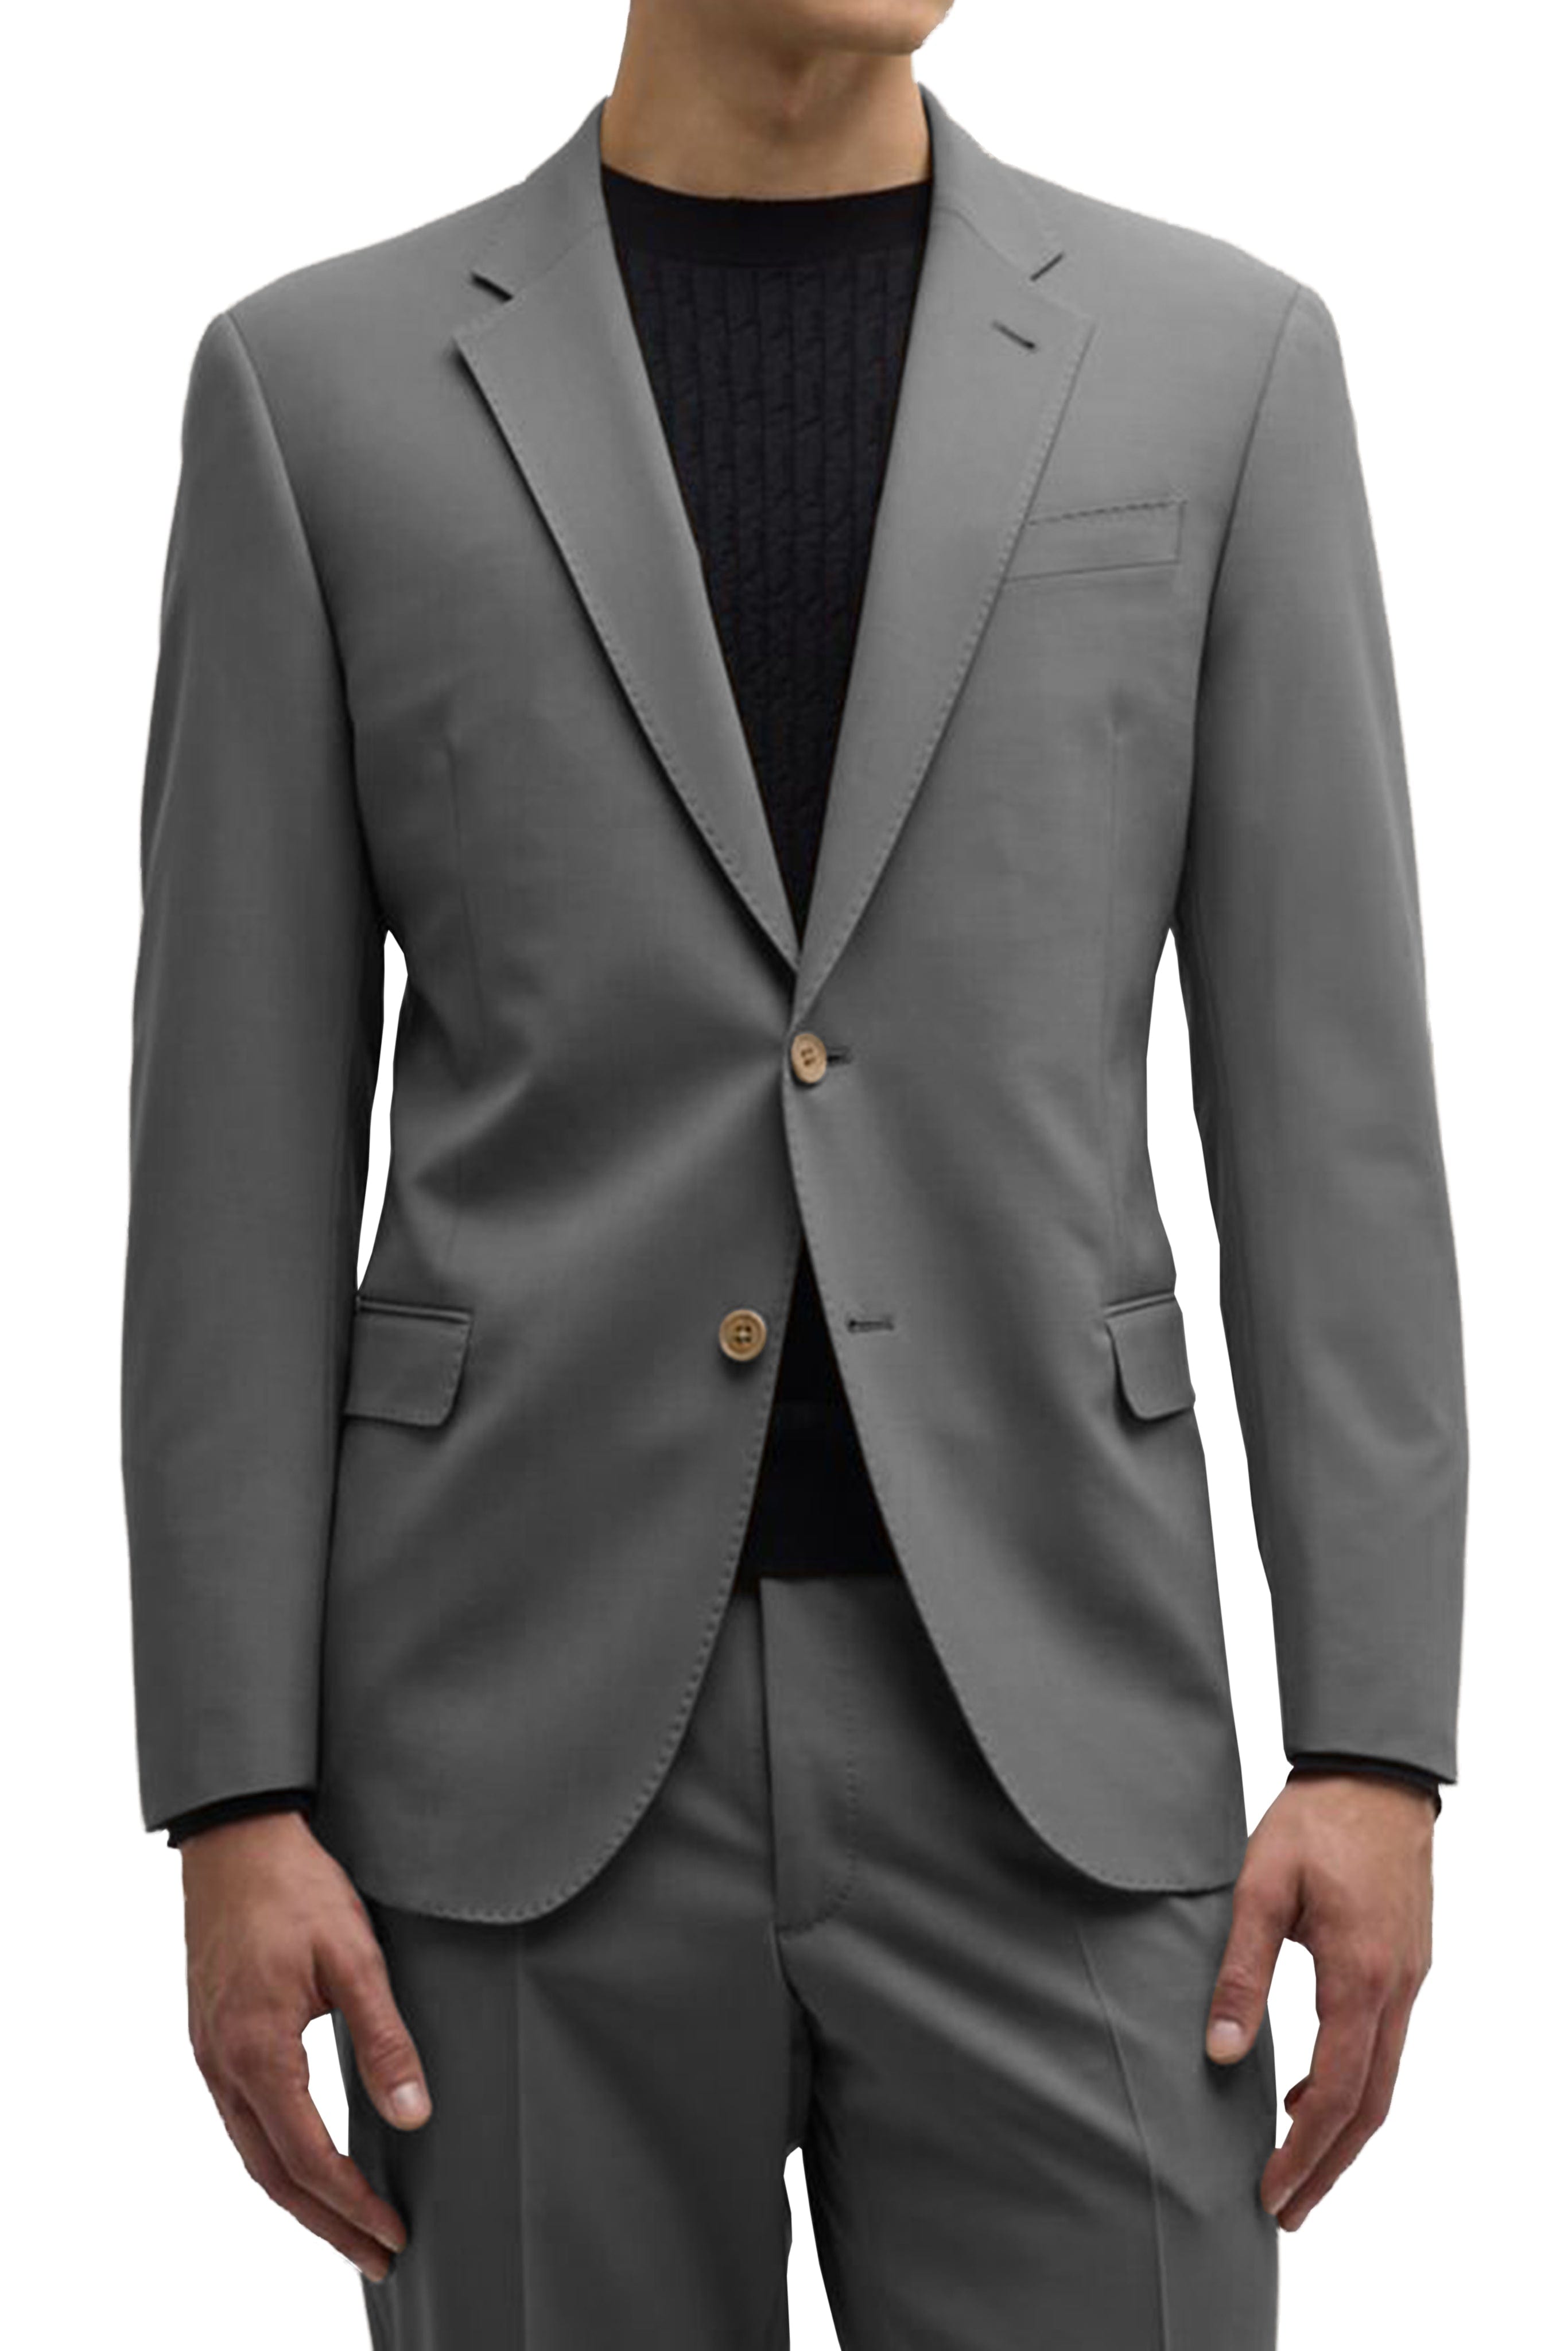 aesido 2 Piece Business Casual Men's Suit For Wedding (Blazer+Pants)